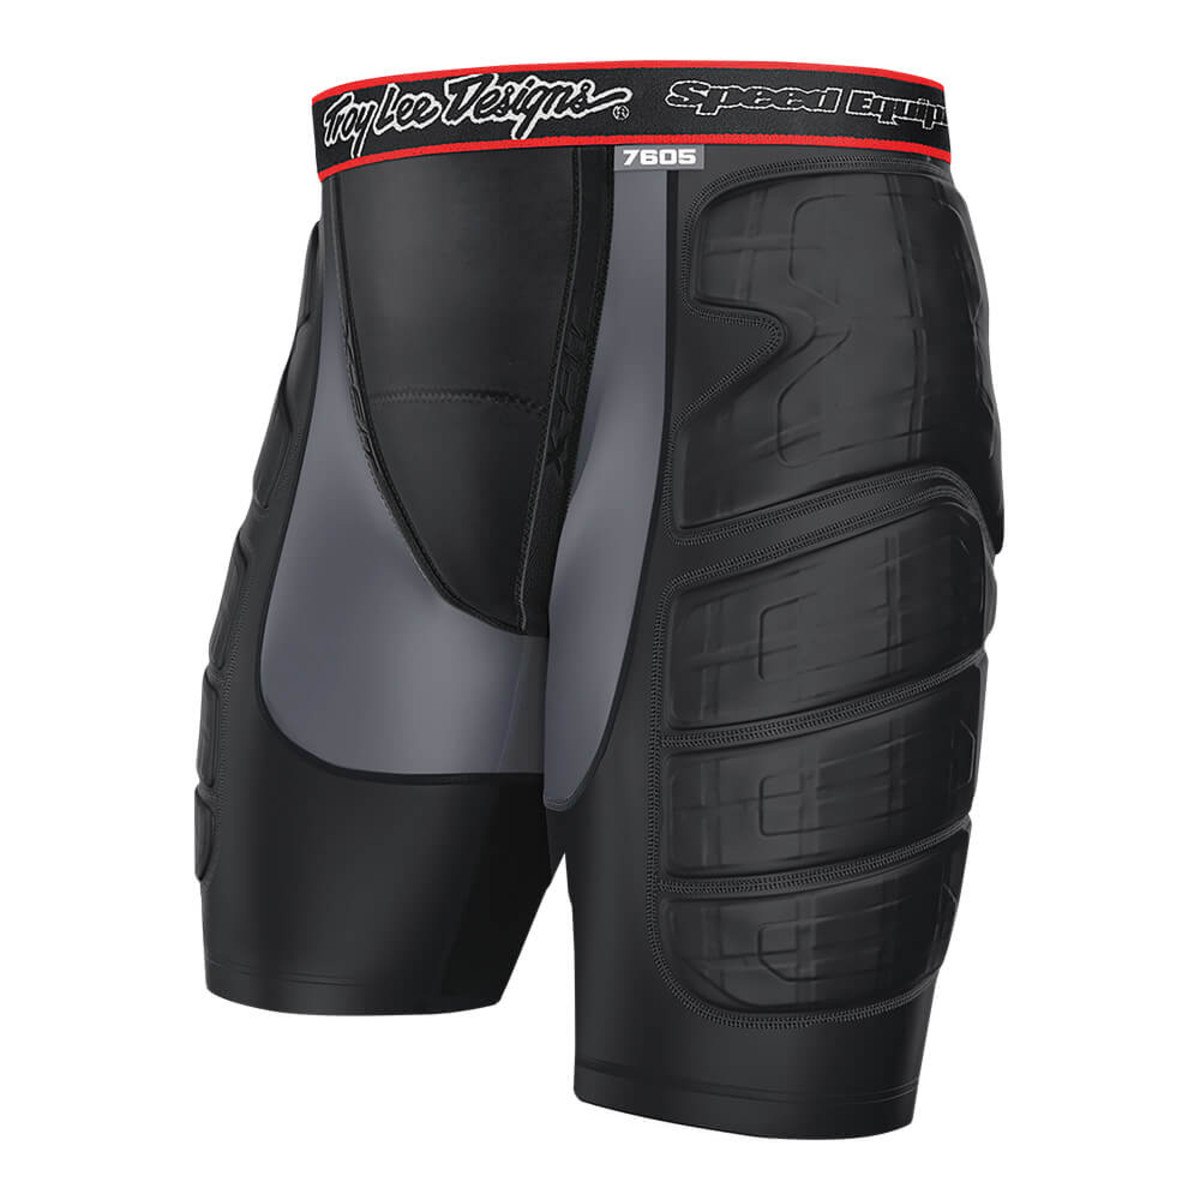 Productfoto van Troy Lee Designs LPS 7605 Lower Protection Shorts - Black